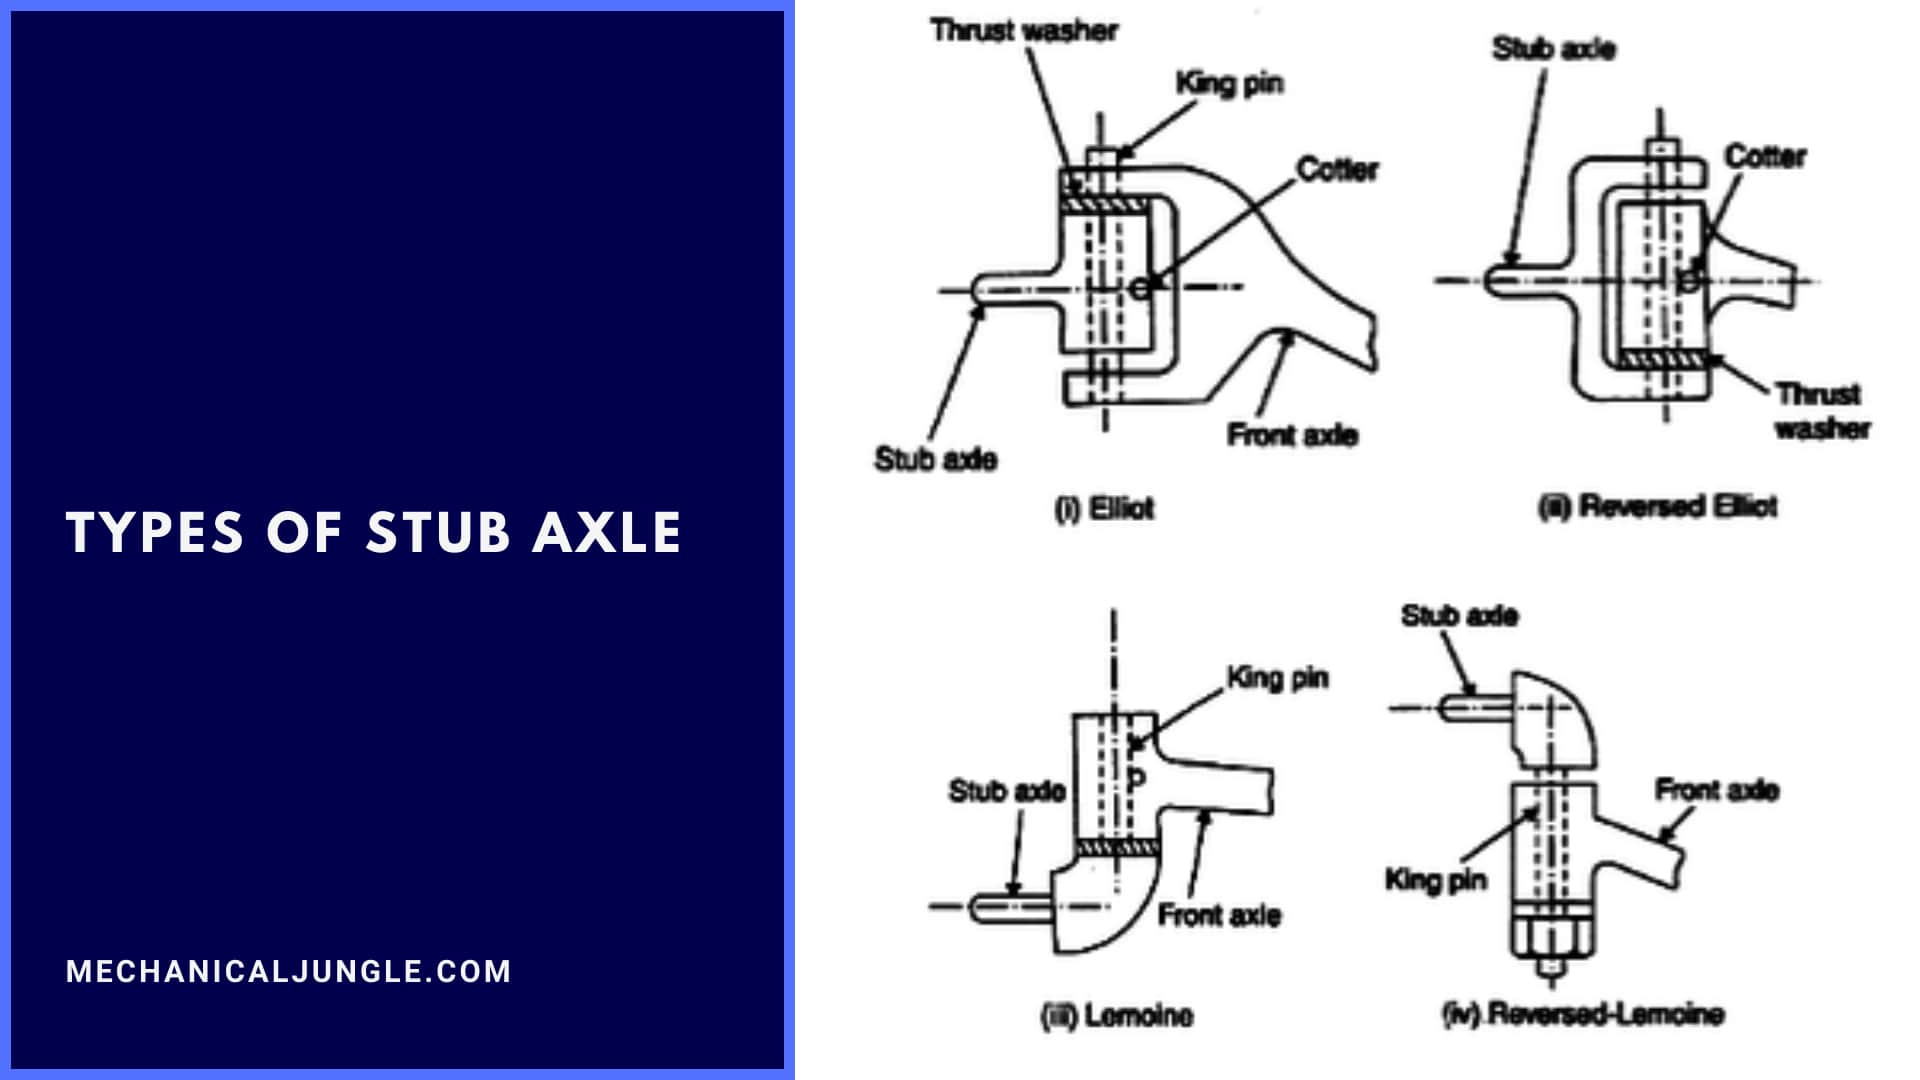 Types of Stub Axle